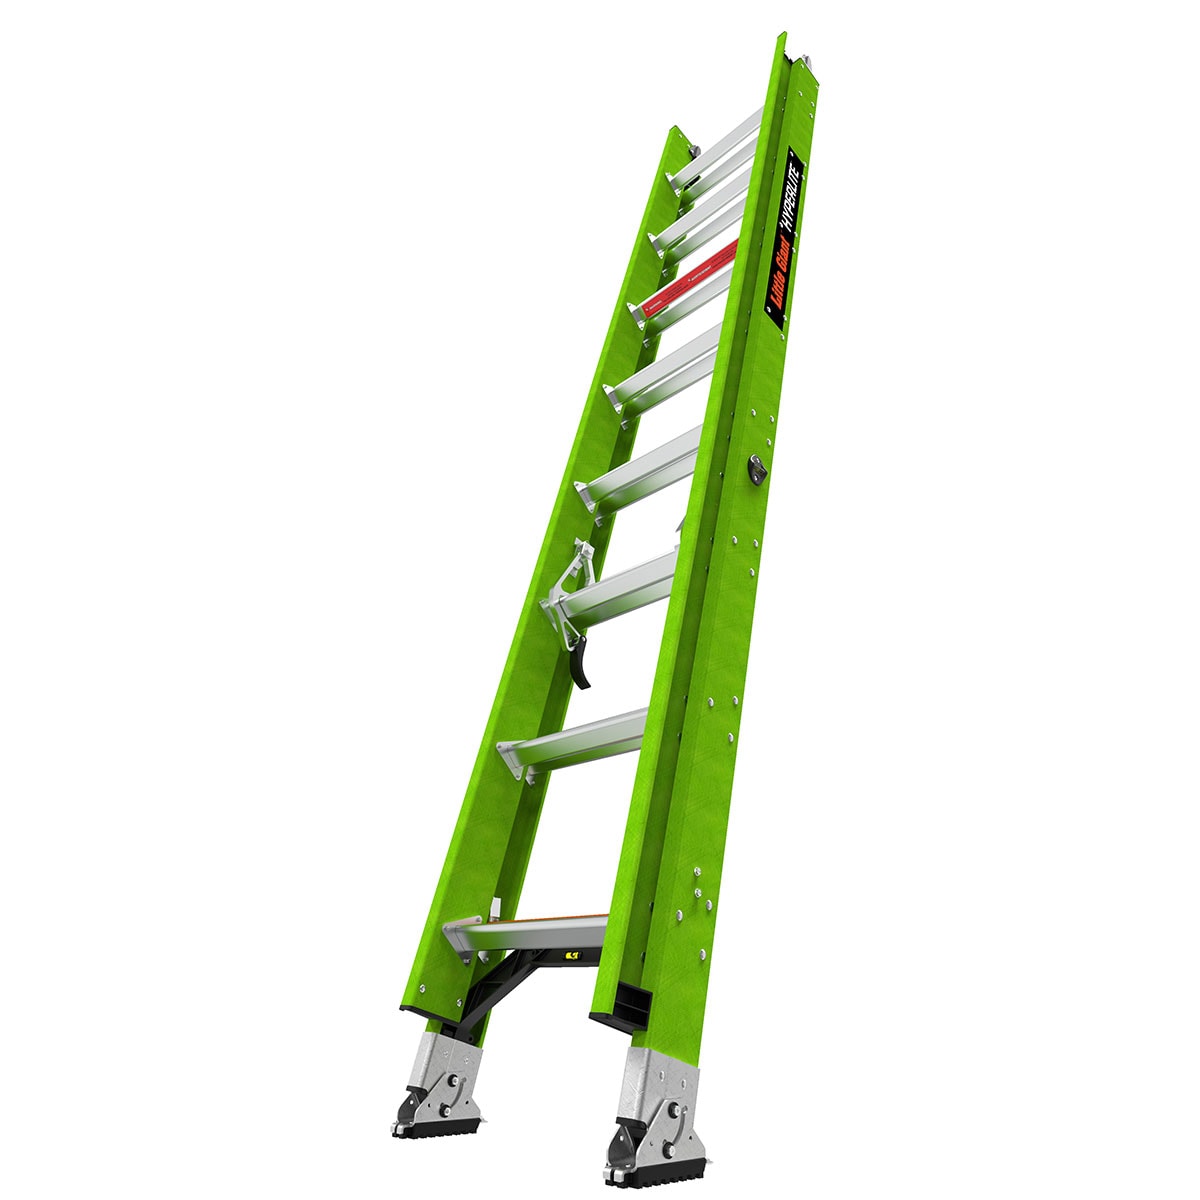 Fiberglass Telescoping Ladders For Sale